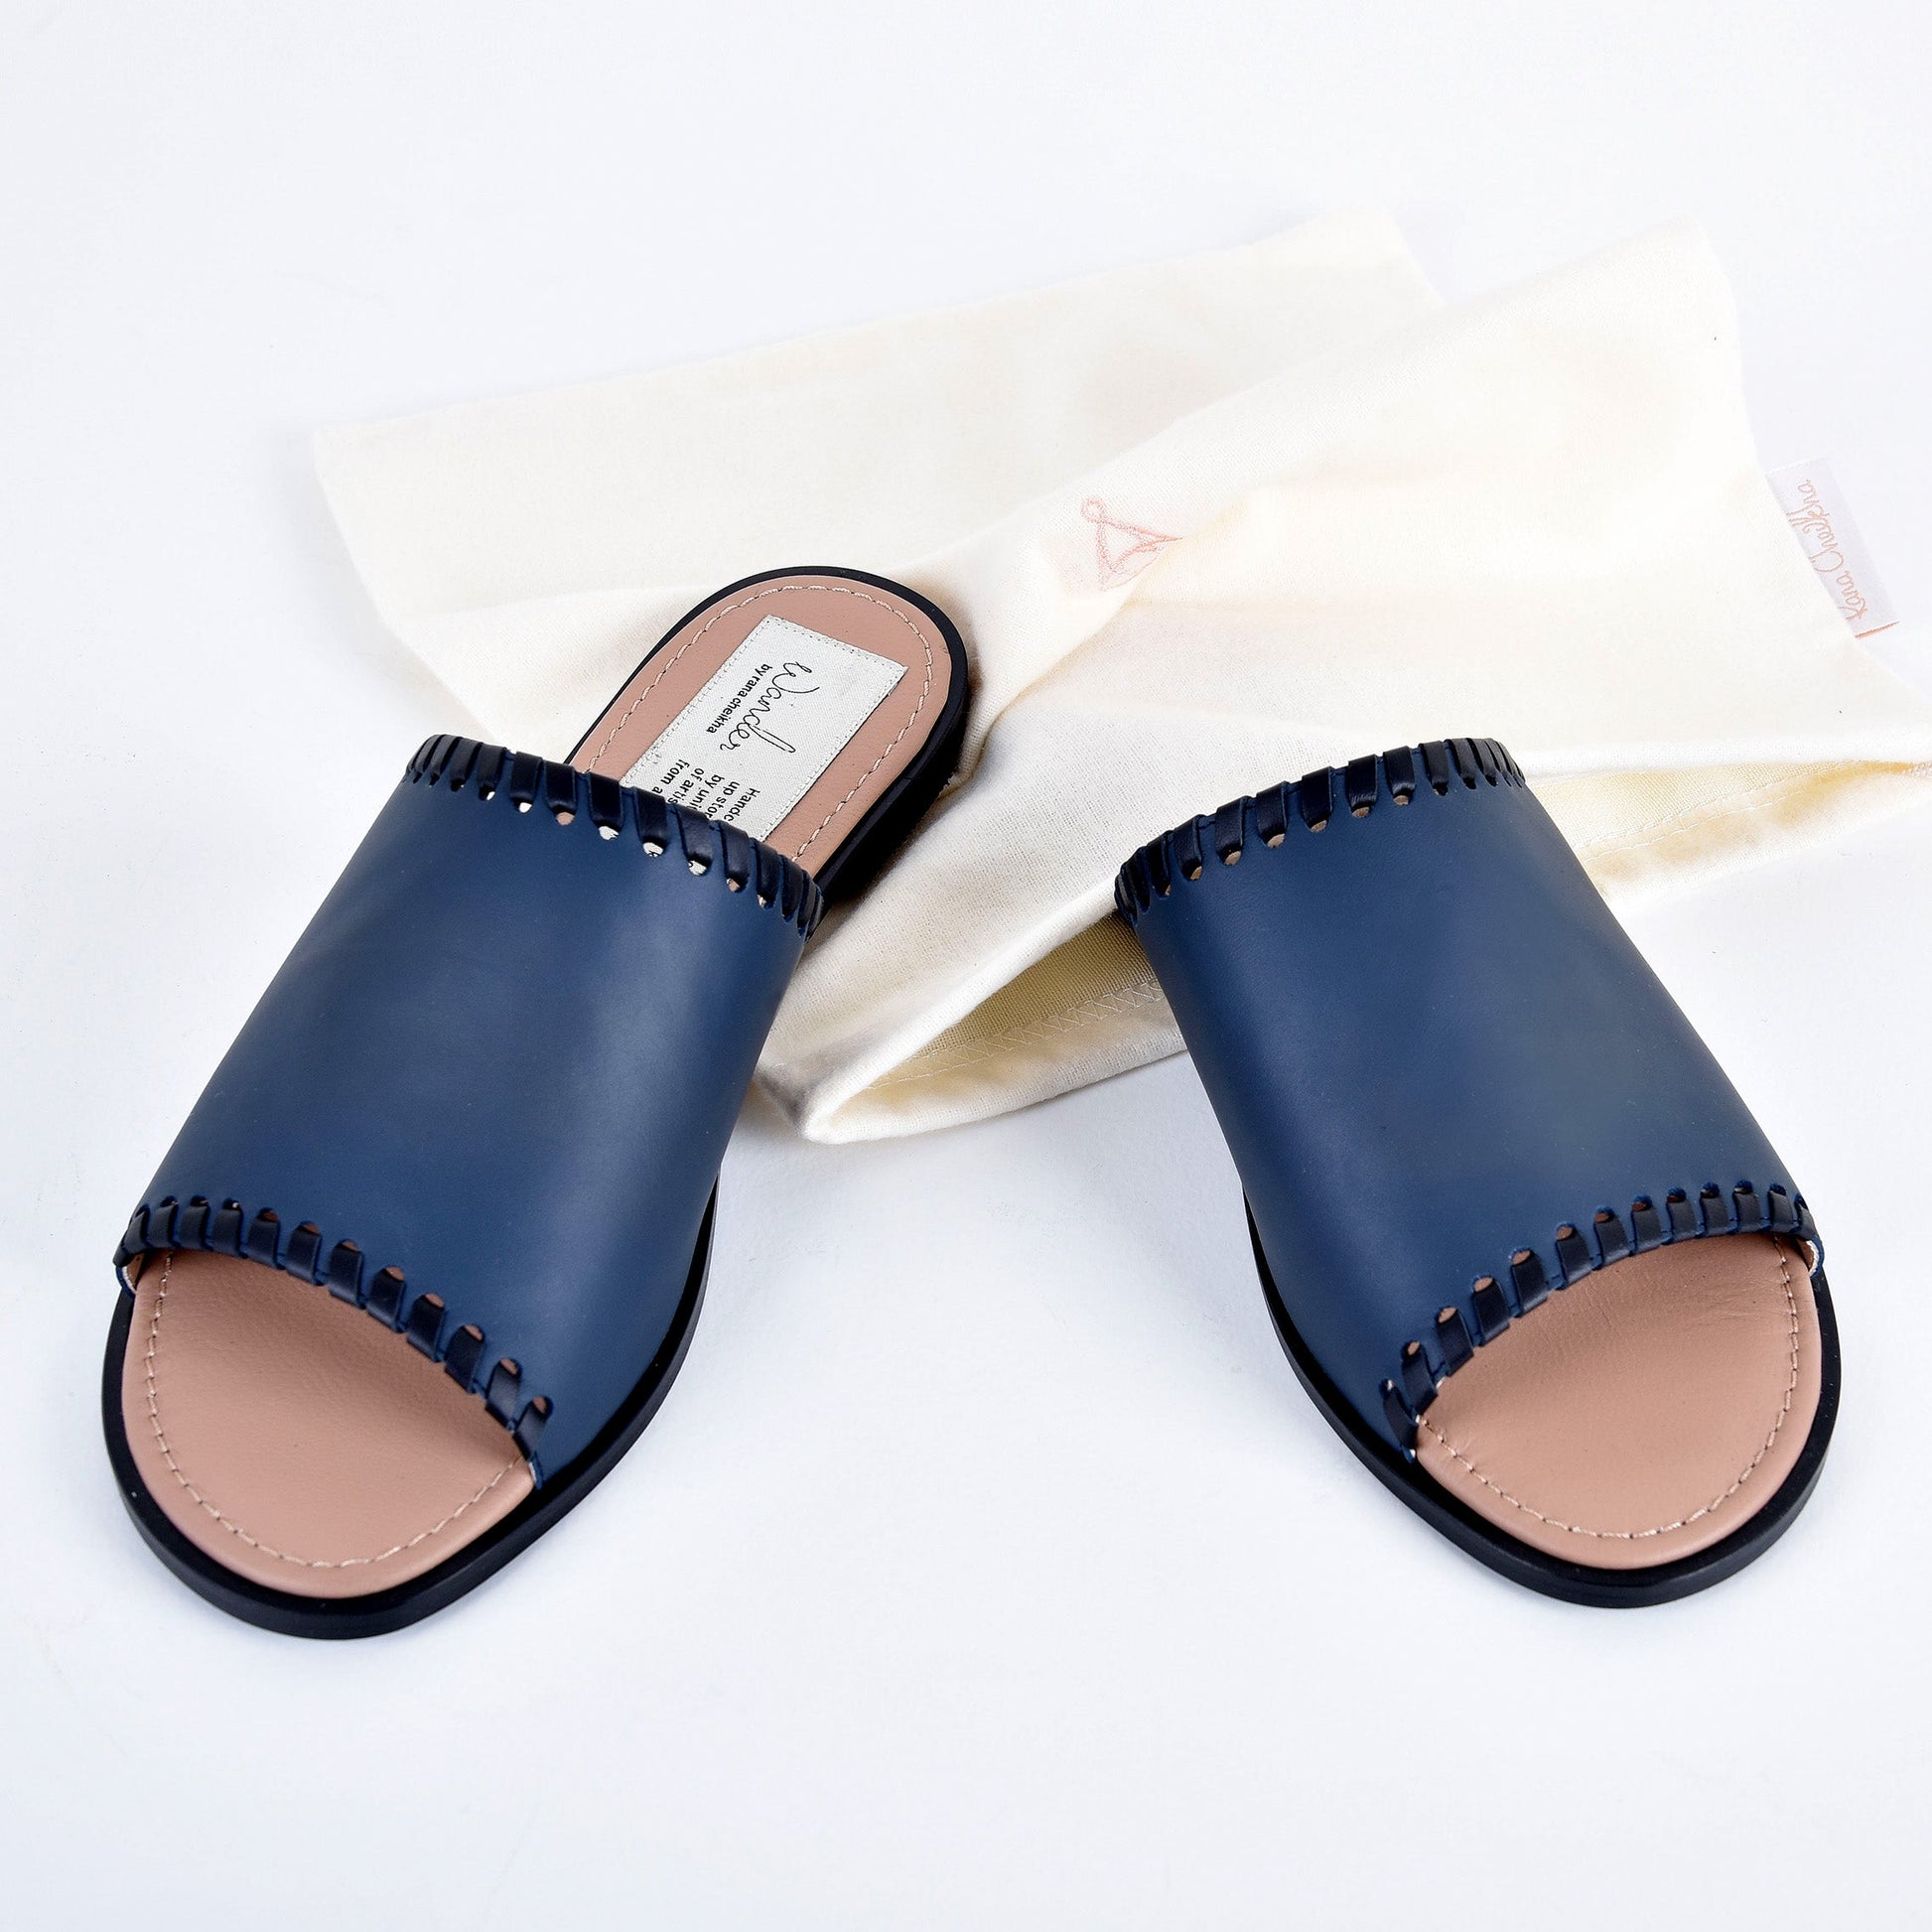 Navy leather slipper